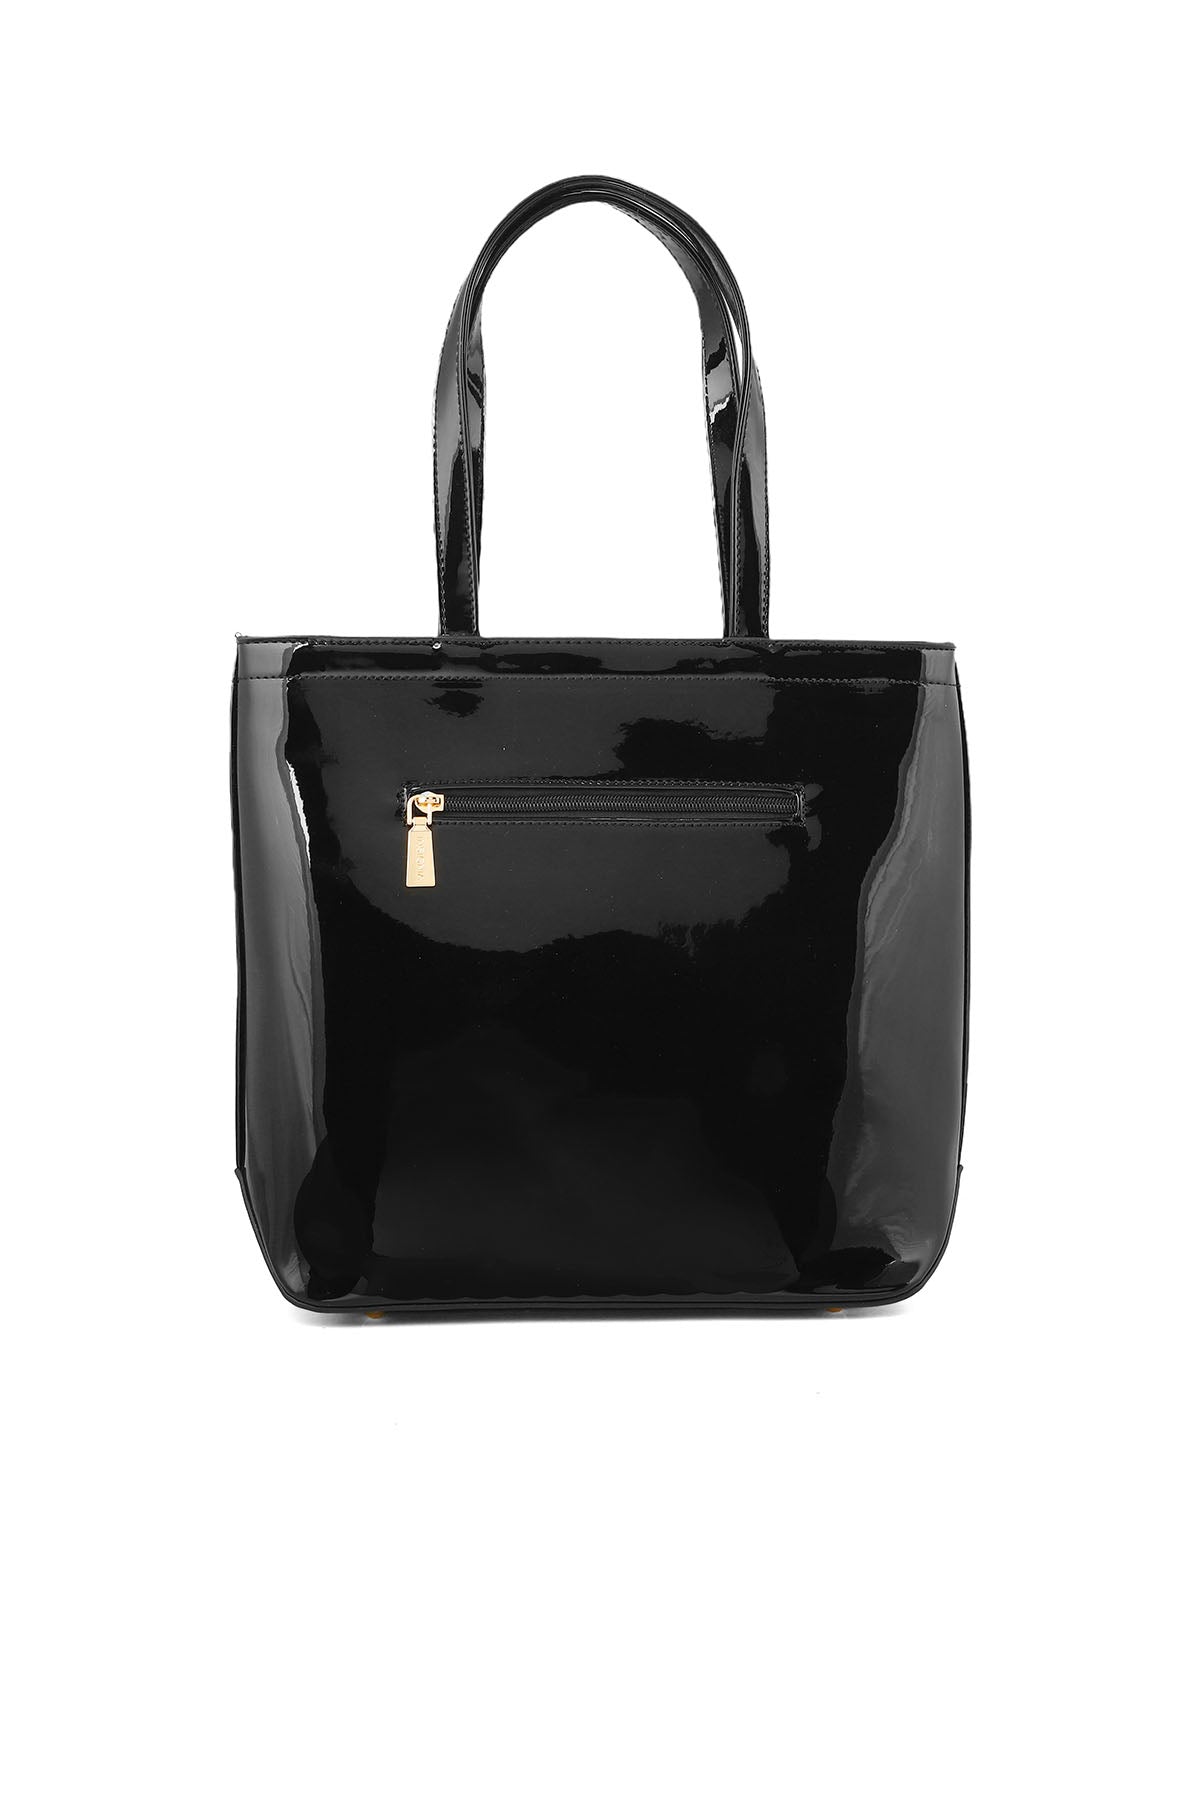 Bucket Hand Bags B15074-Black